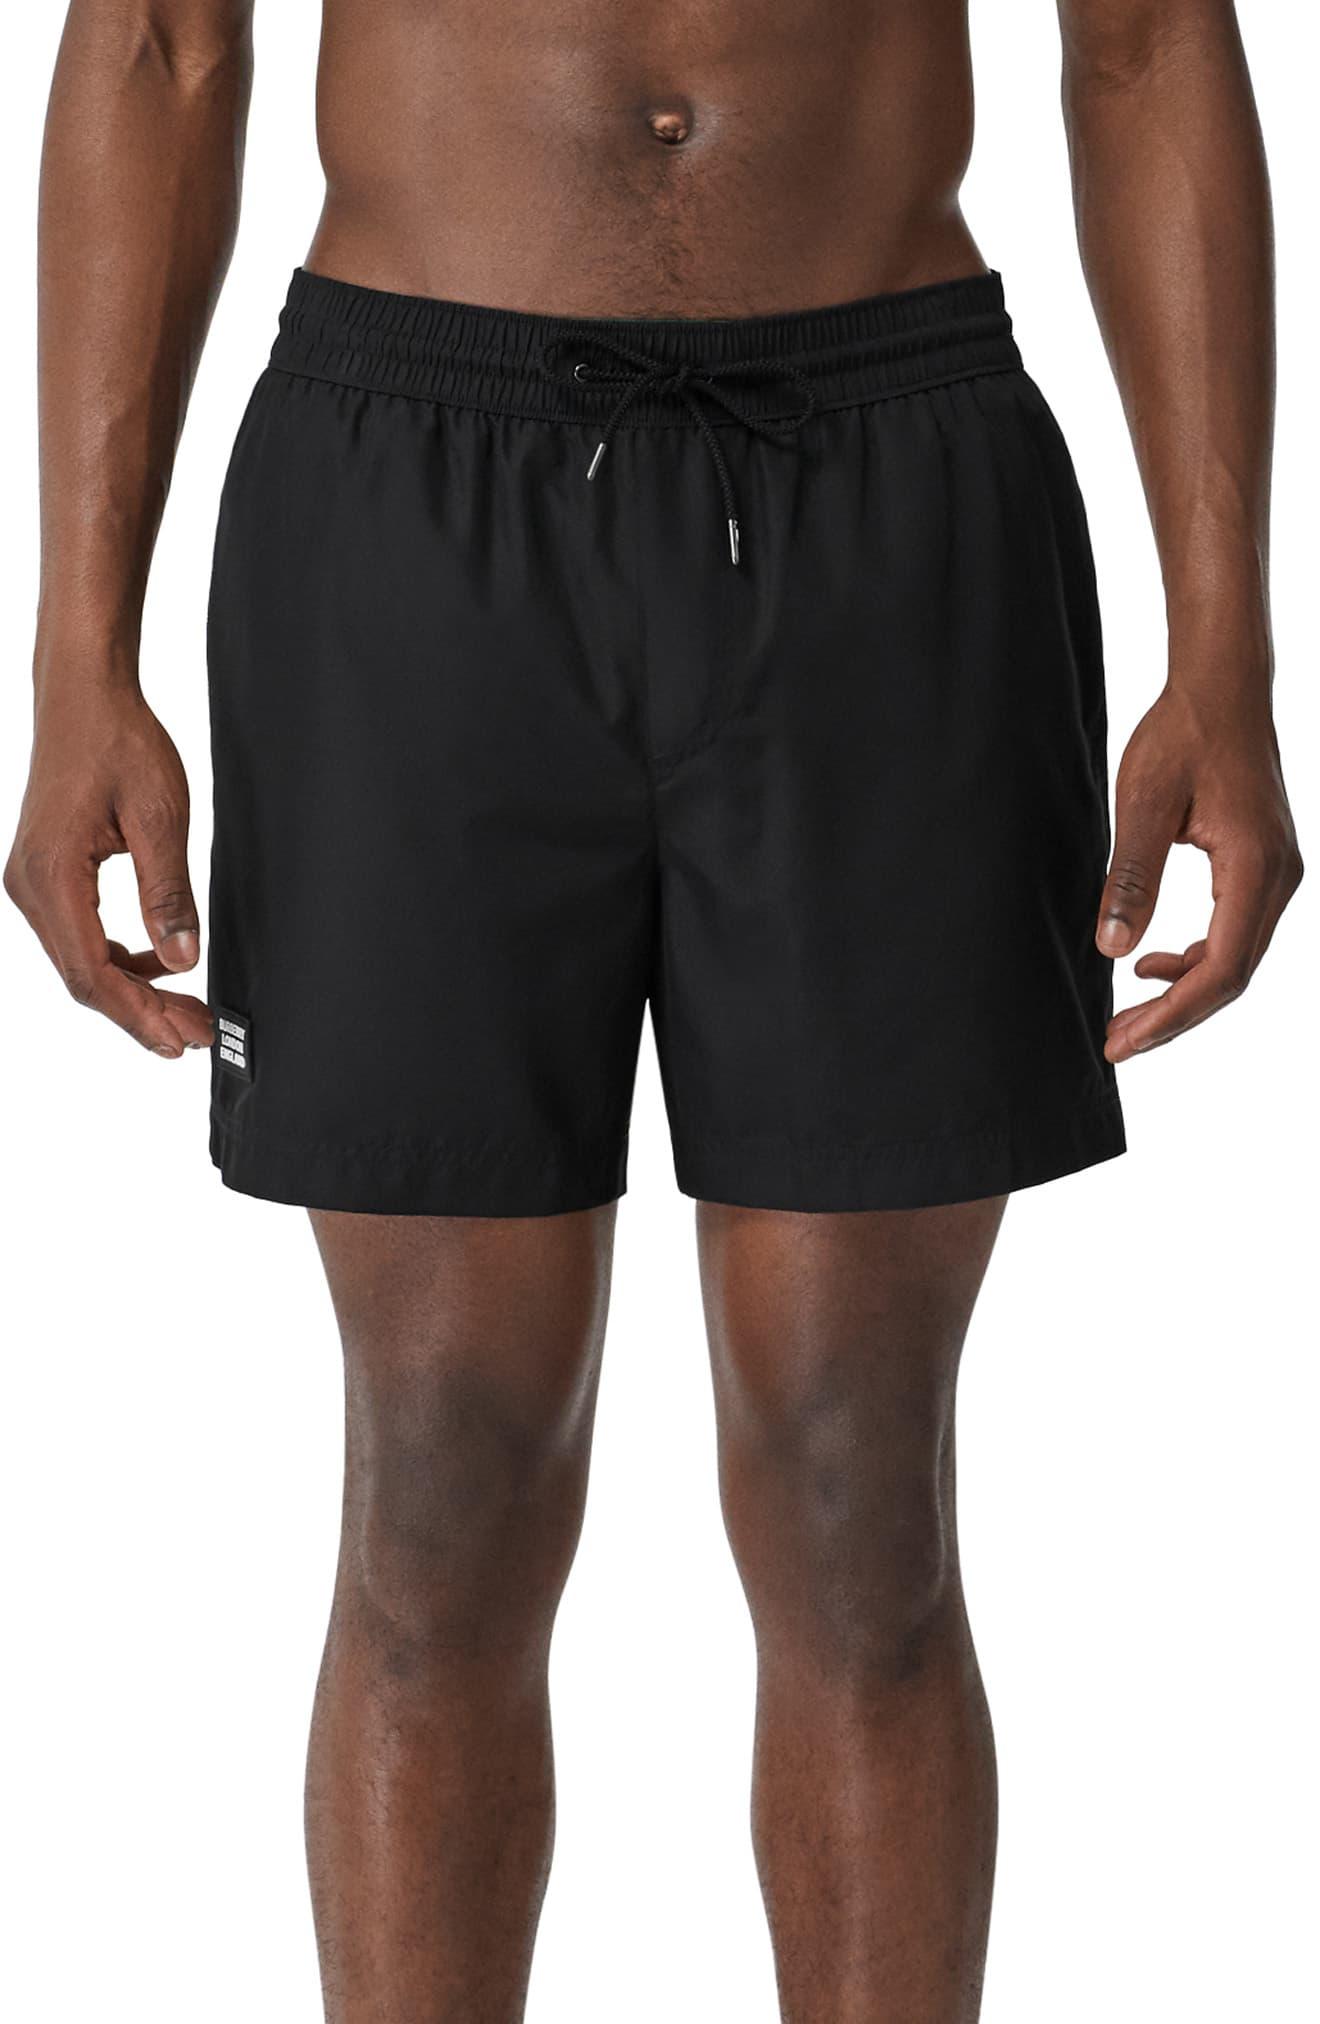 Burberry Synthetic Grafton Swim Shorts in Black for Men - Lyst